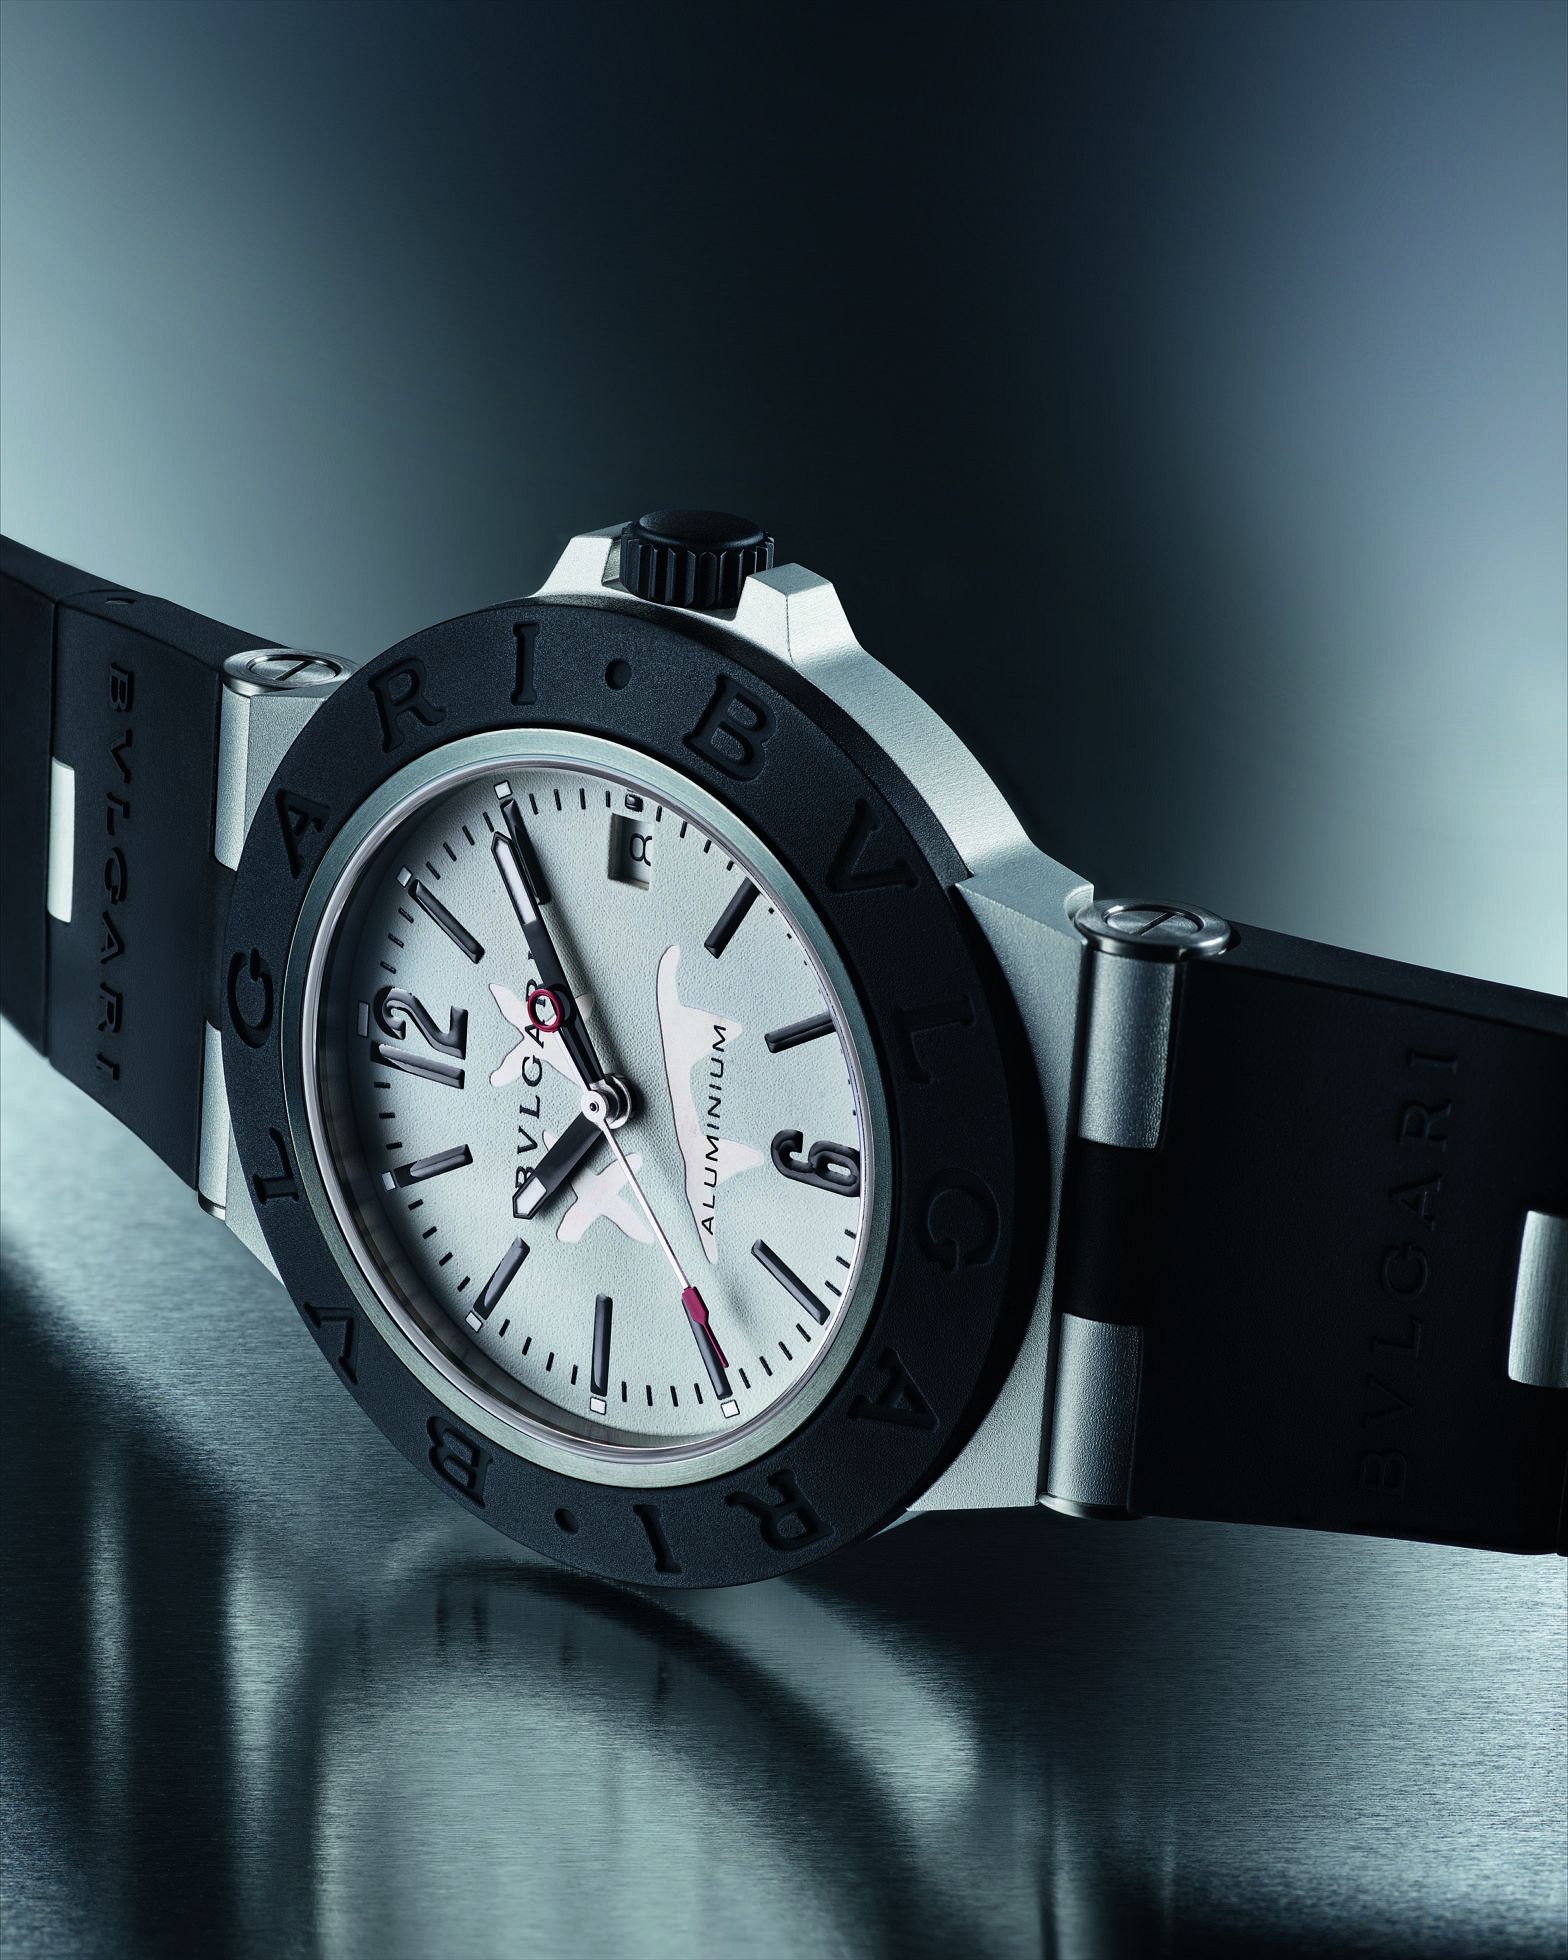 the Bulgari Aluminium Steve Aoki is the latest watch inspired by dance music